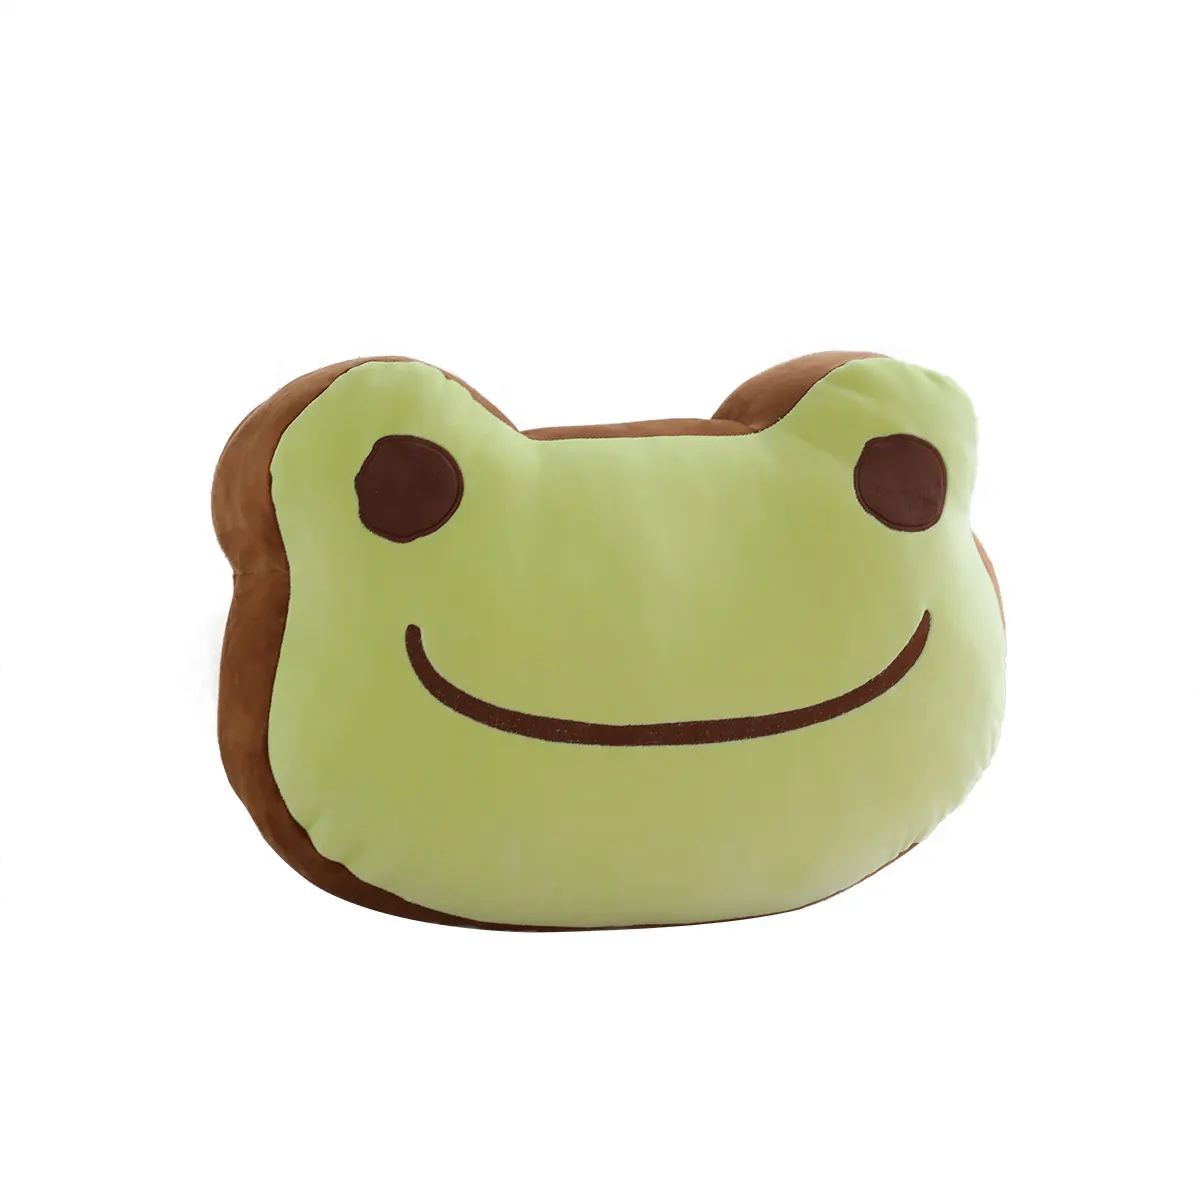 Plush frog toy 2022 baby lovely soft stuffed cute frog plush avocado plush pillow